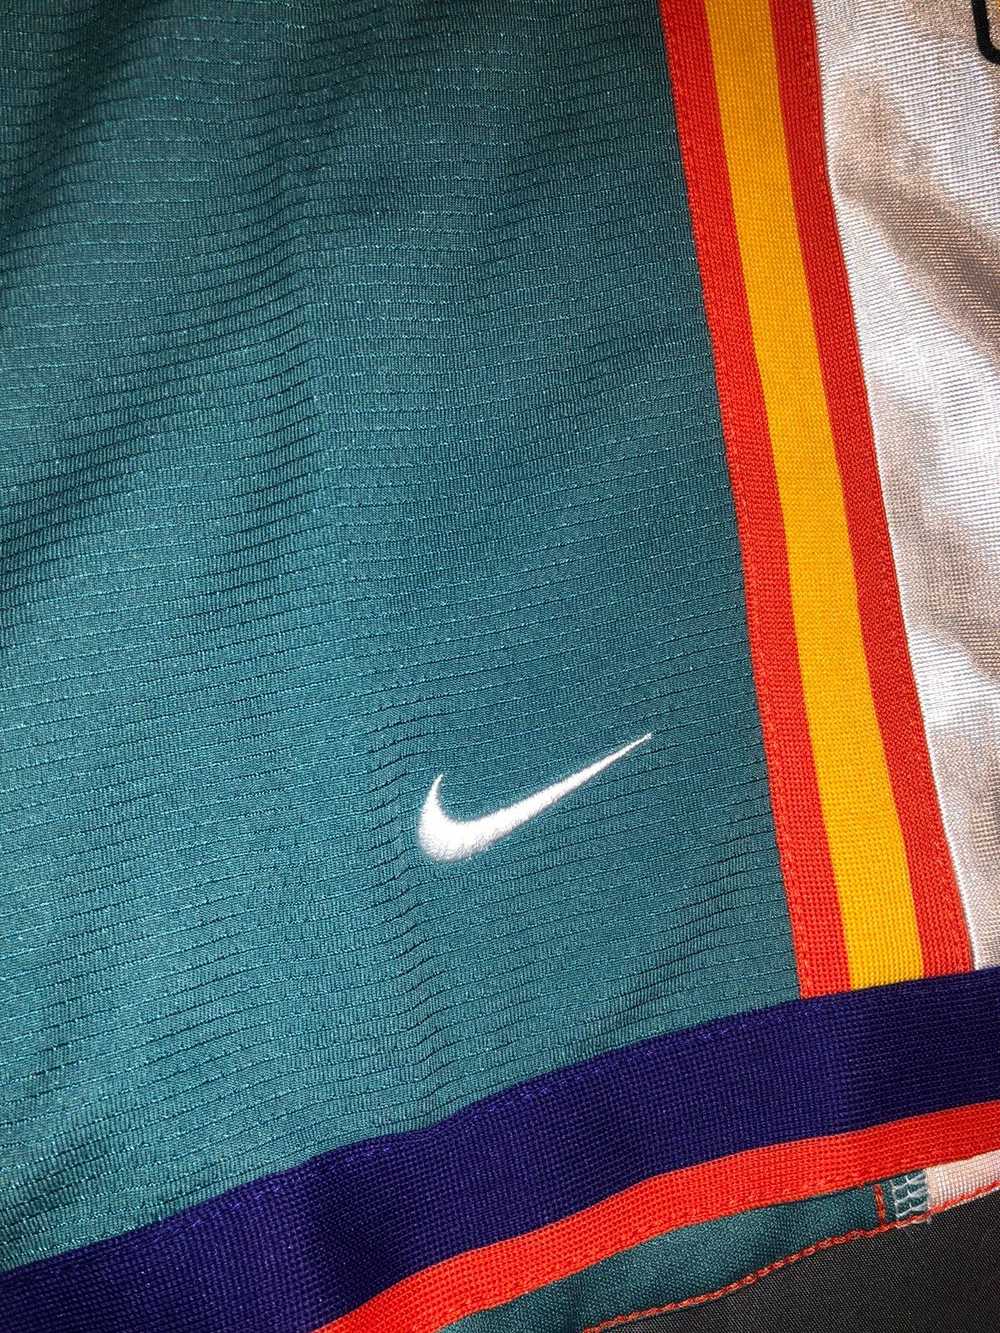 Nike Nike Dri-Fit Basketball Shorts - image 2